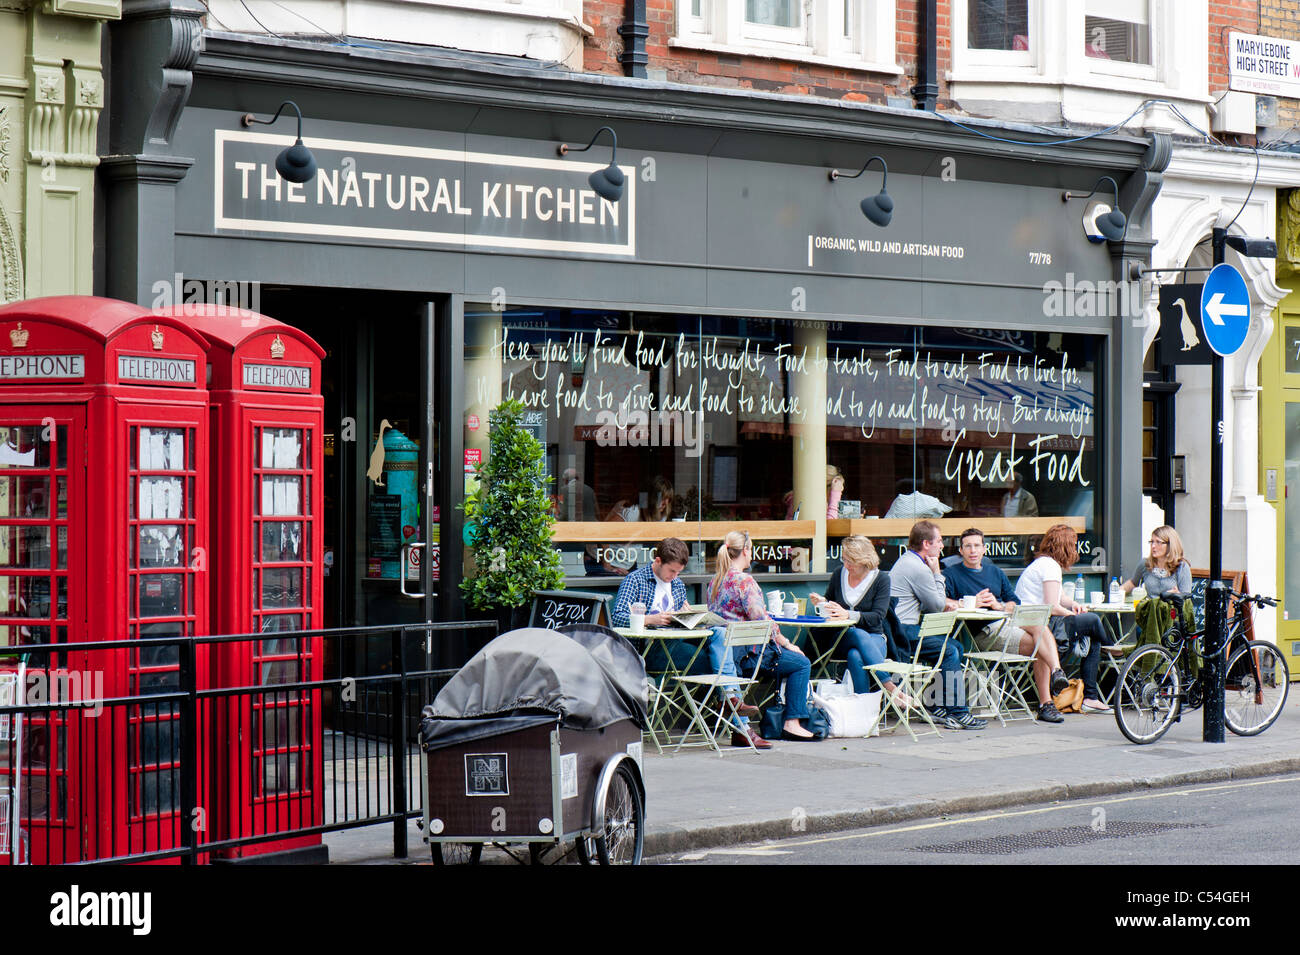 Cafe bar que sirve comida orgánica en Marylebone High Street, W1, Londres, Reino Unido. Foto de stock